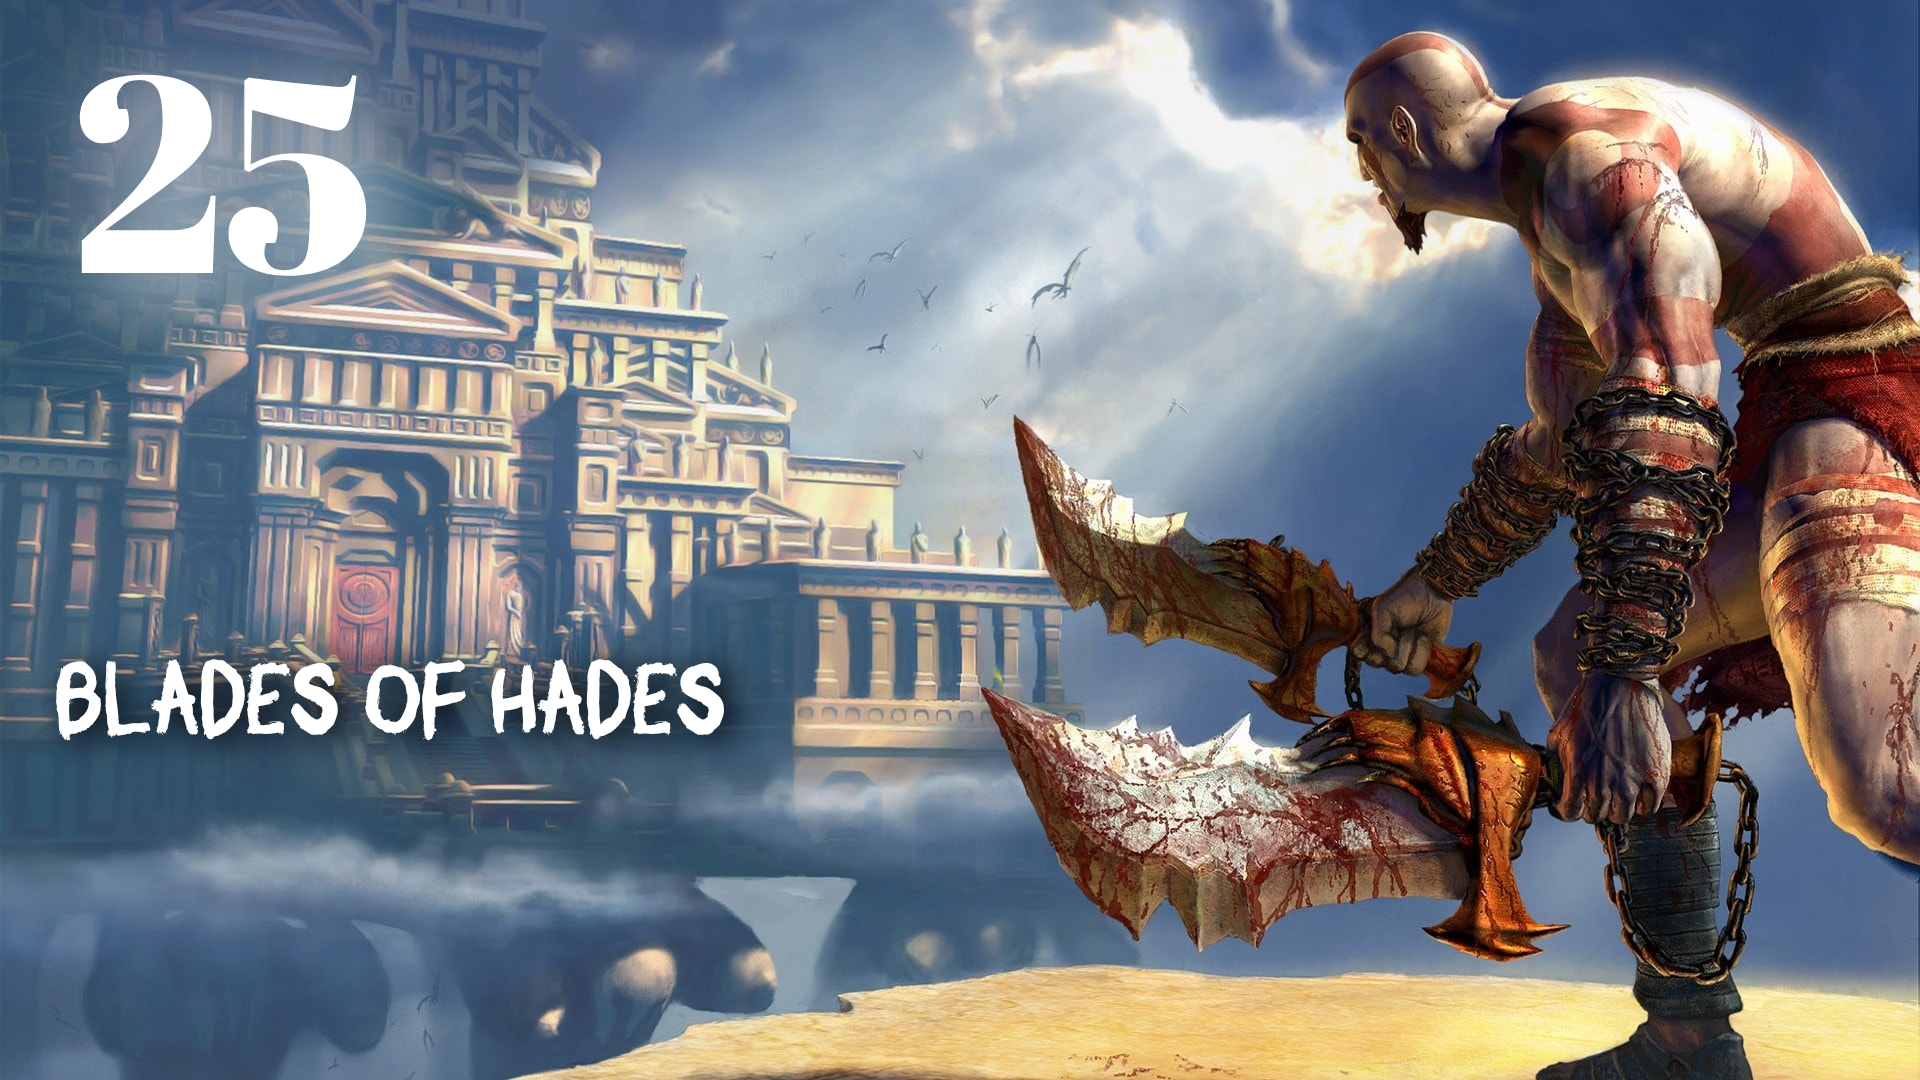 God of War HD The Challenge of Hades: Blades of Hades